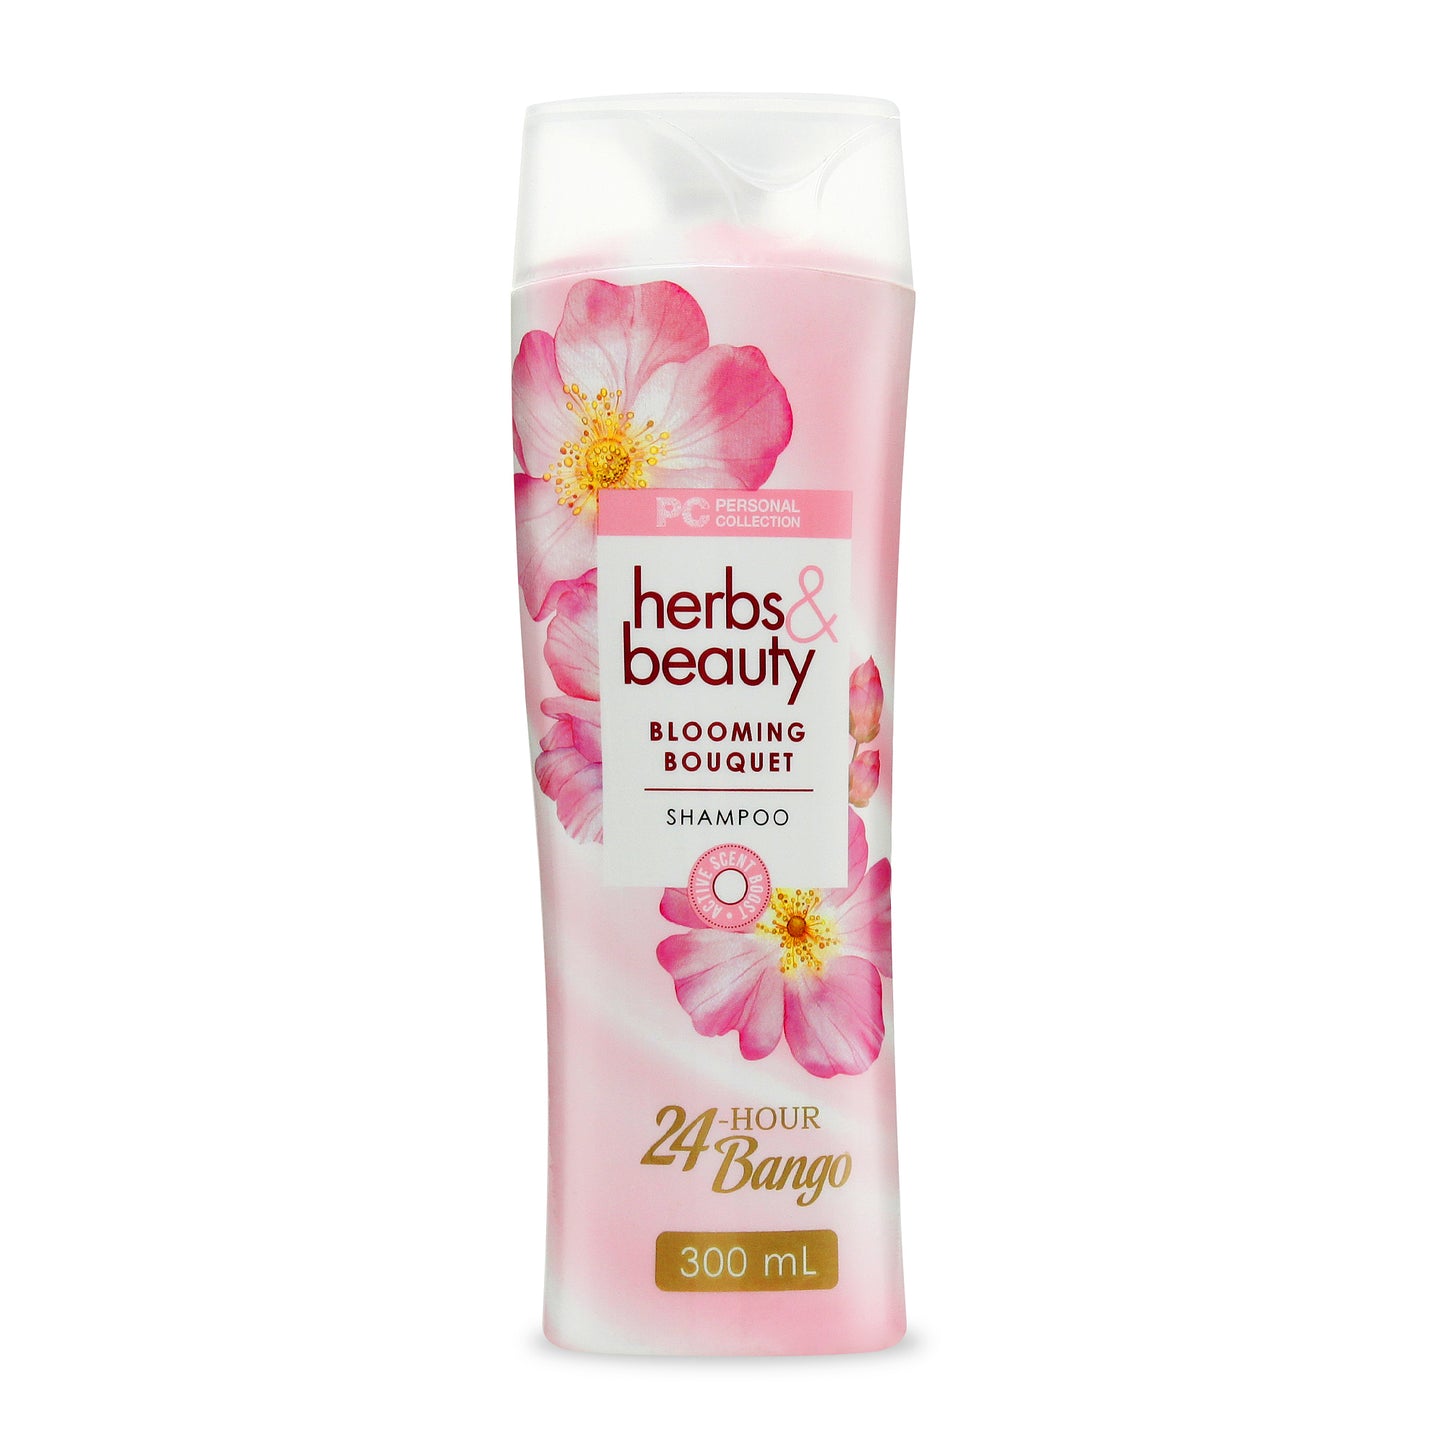 Herbs & Beauty Shampoo Blooming Bouquet 300 mL